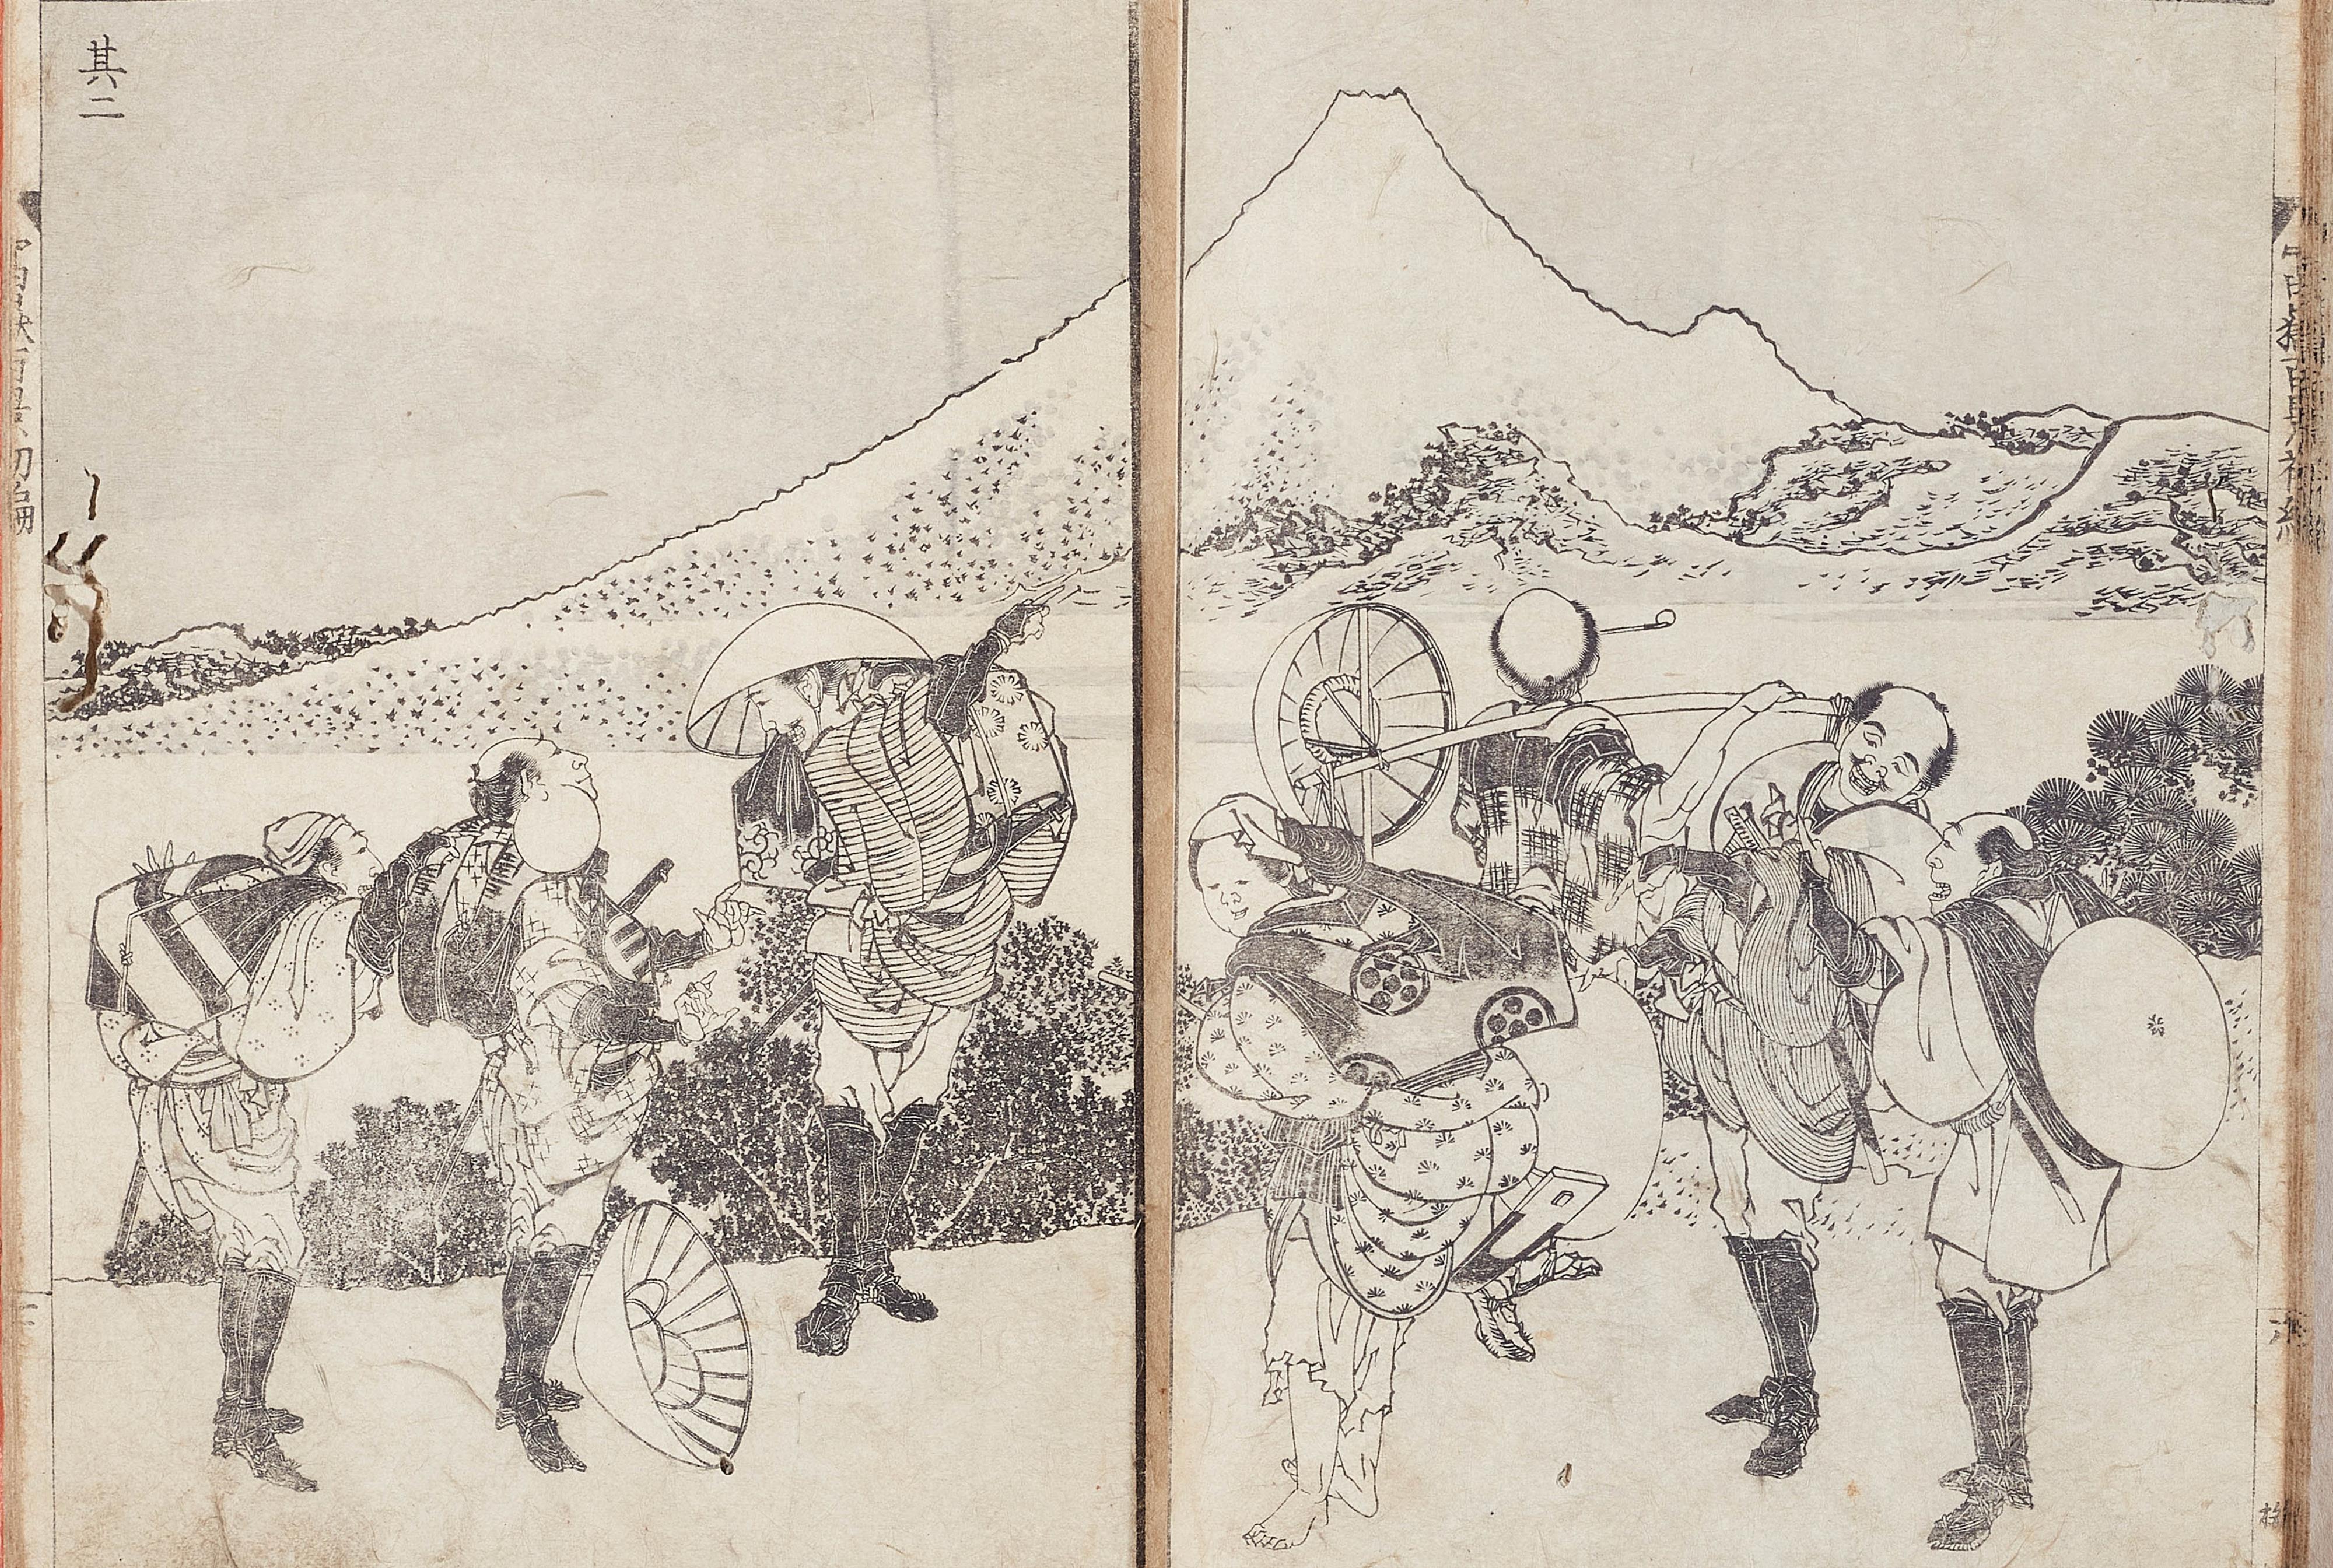 Katsushika Hokusai - Illustriertes Buch - image-1